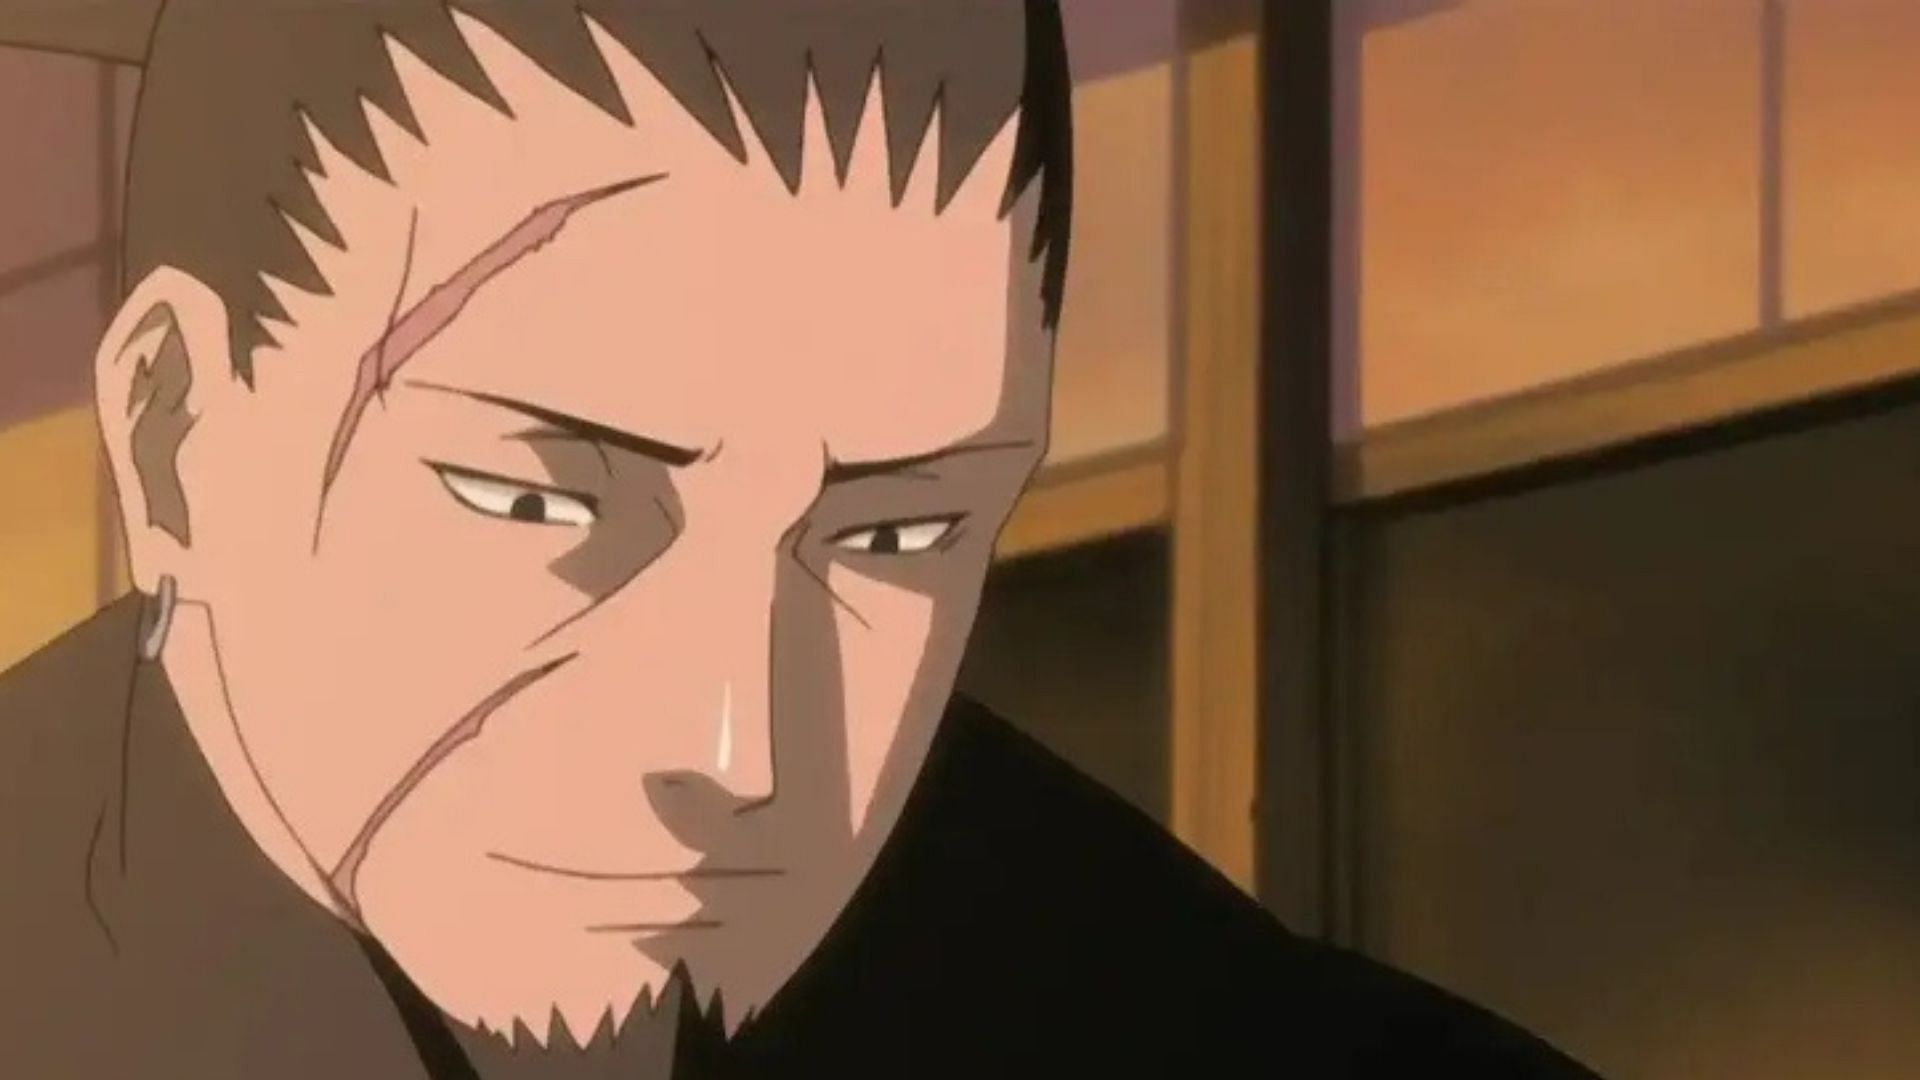 Nara Shikaku as seen in the anime(Image via Studio Pierrot)